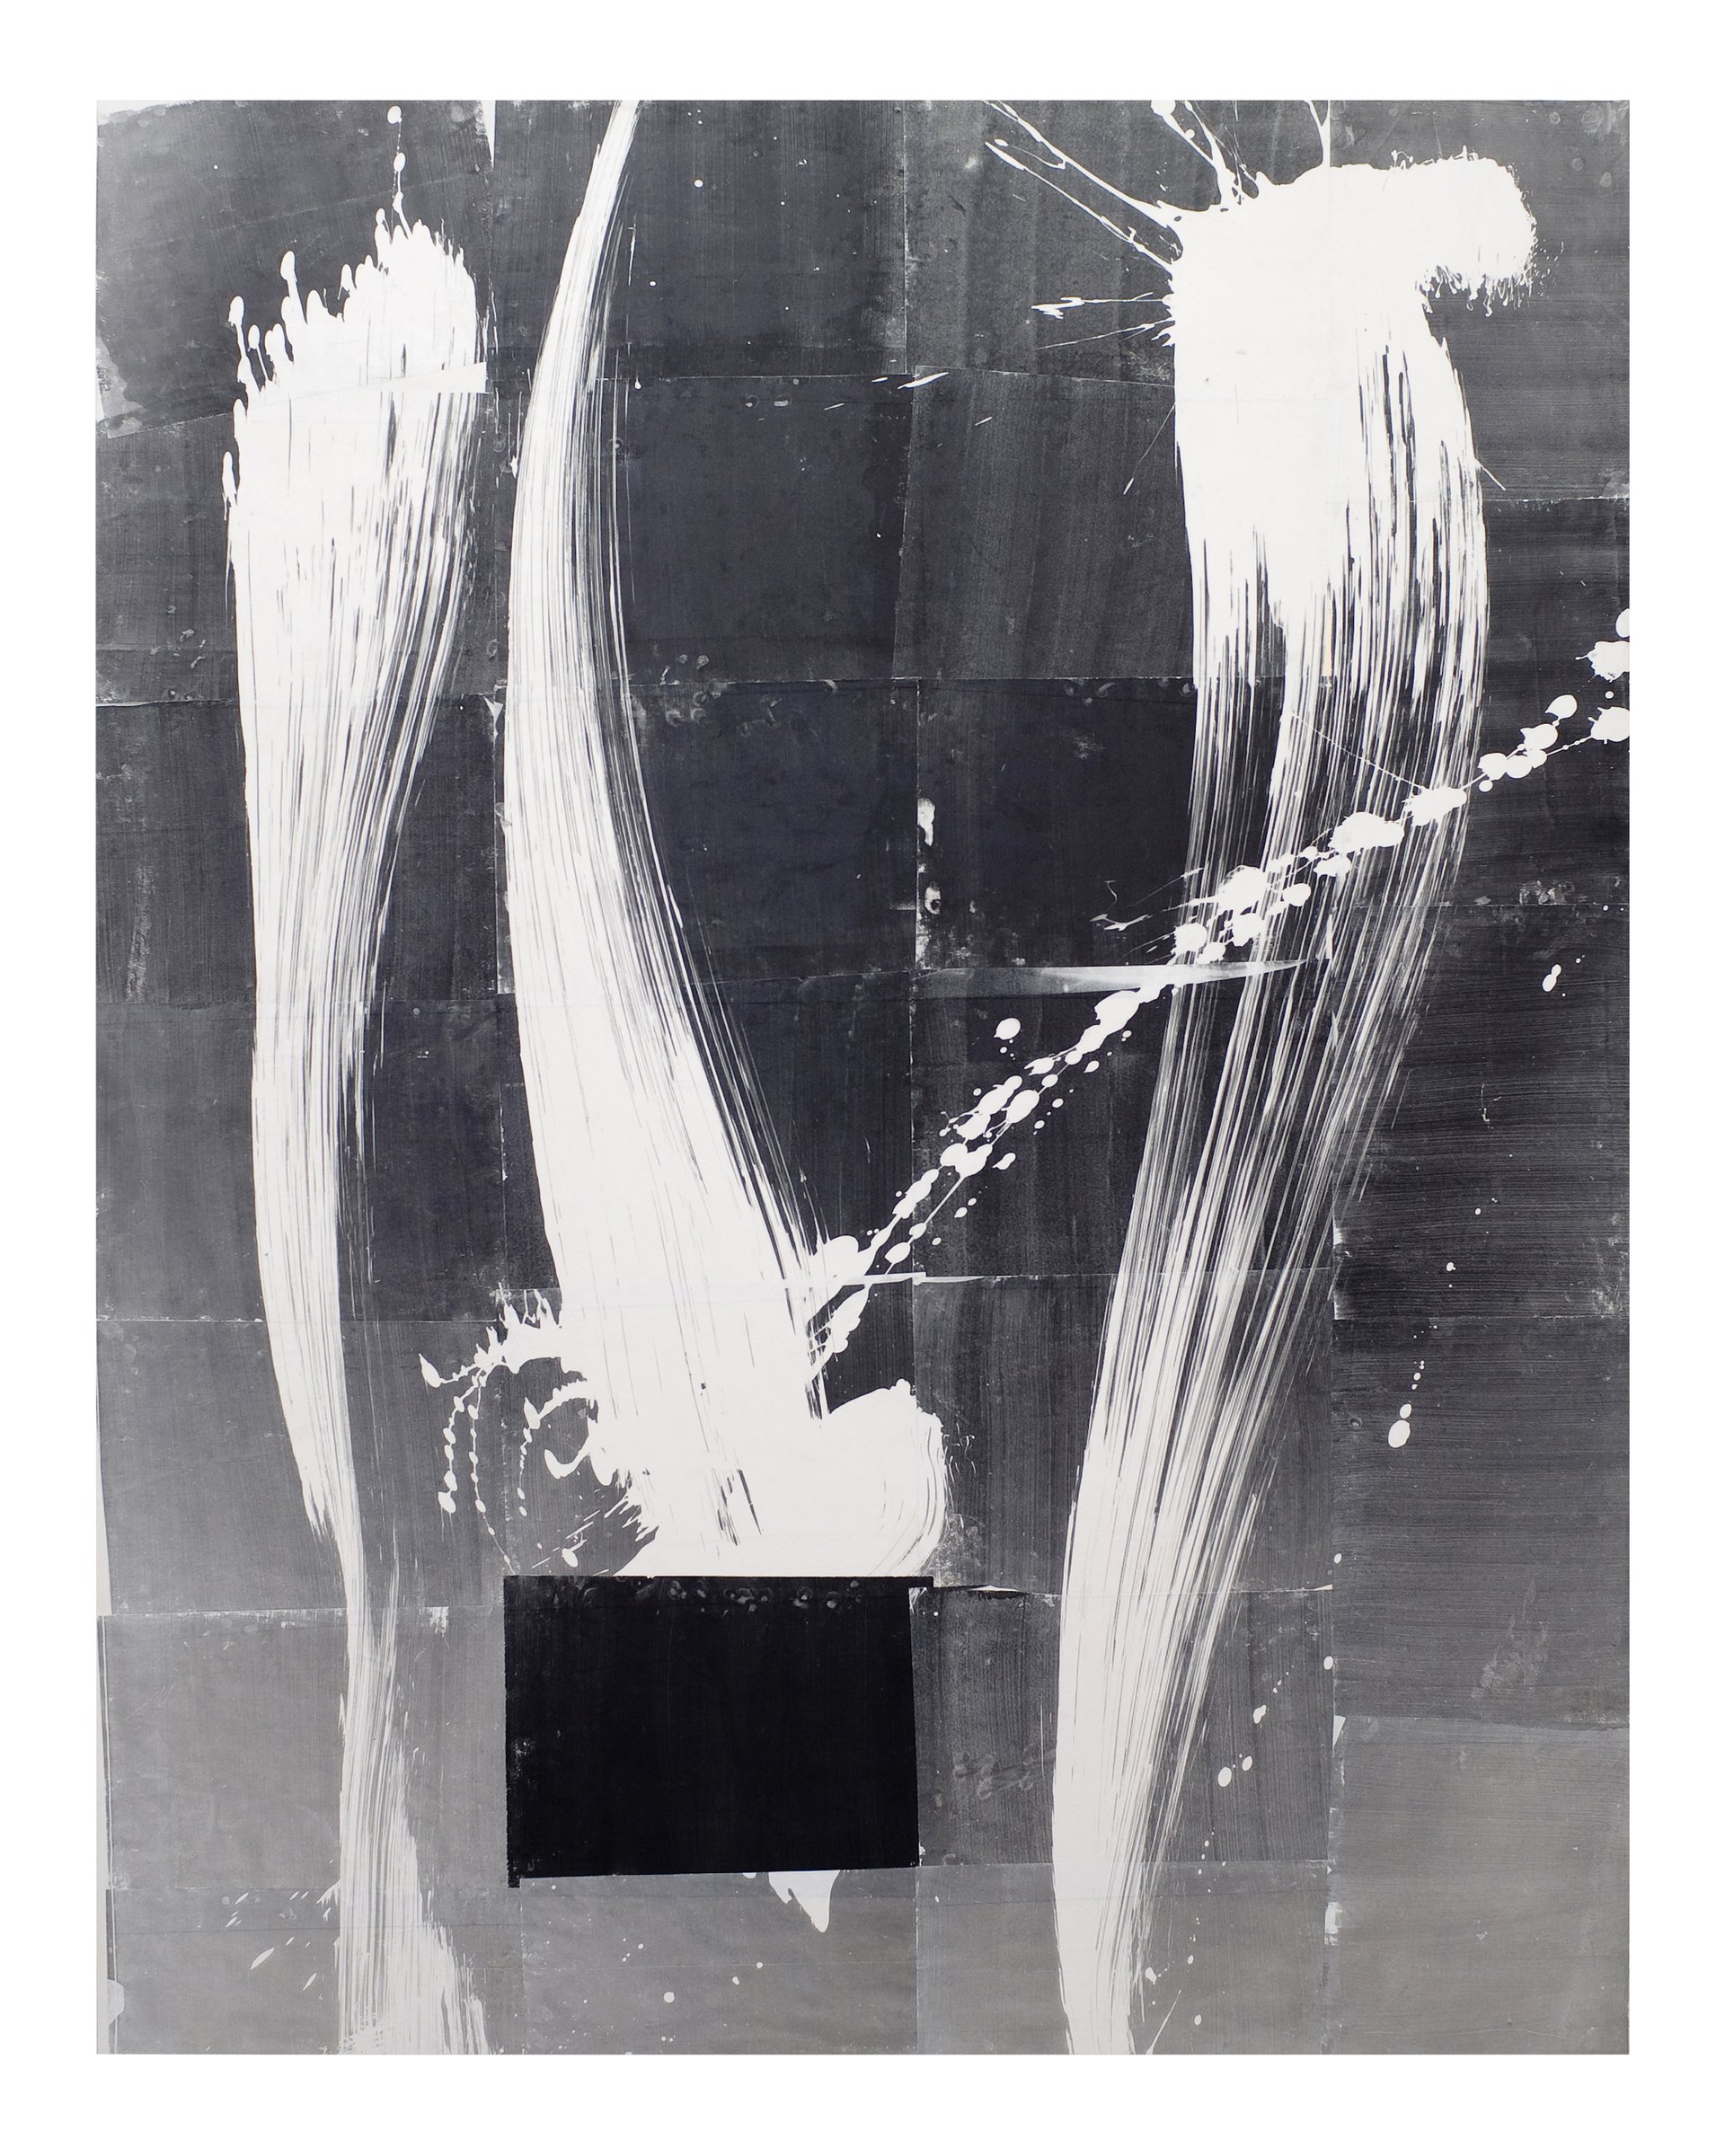 Tillman KaiserUntitled, 2016Photogram on paper on wood180 x 140 cm